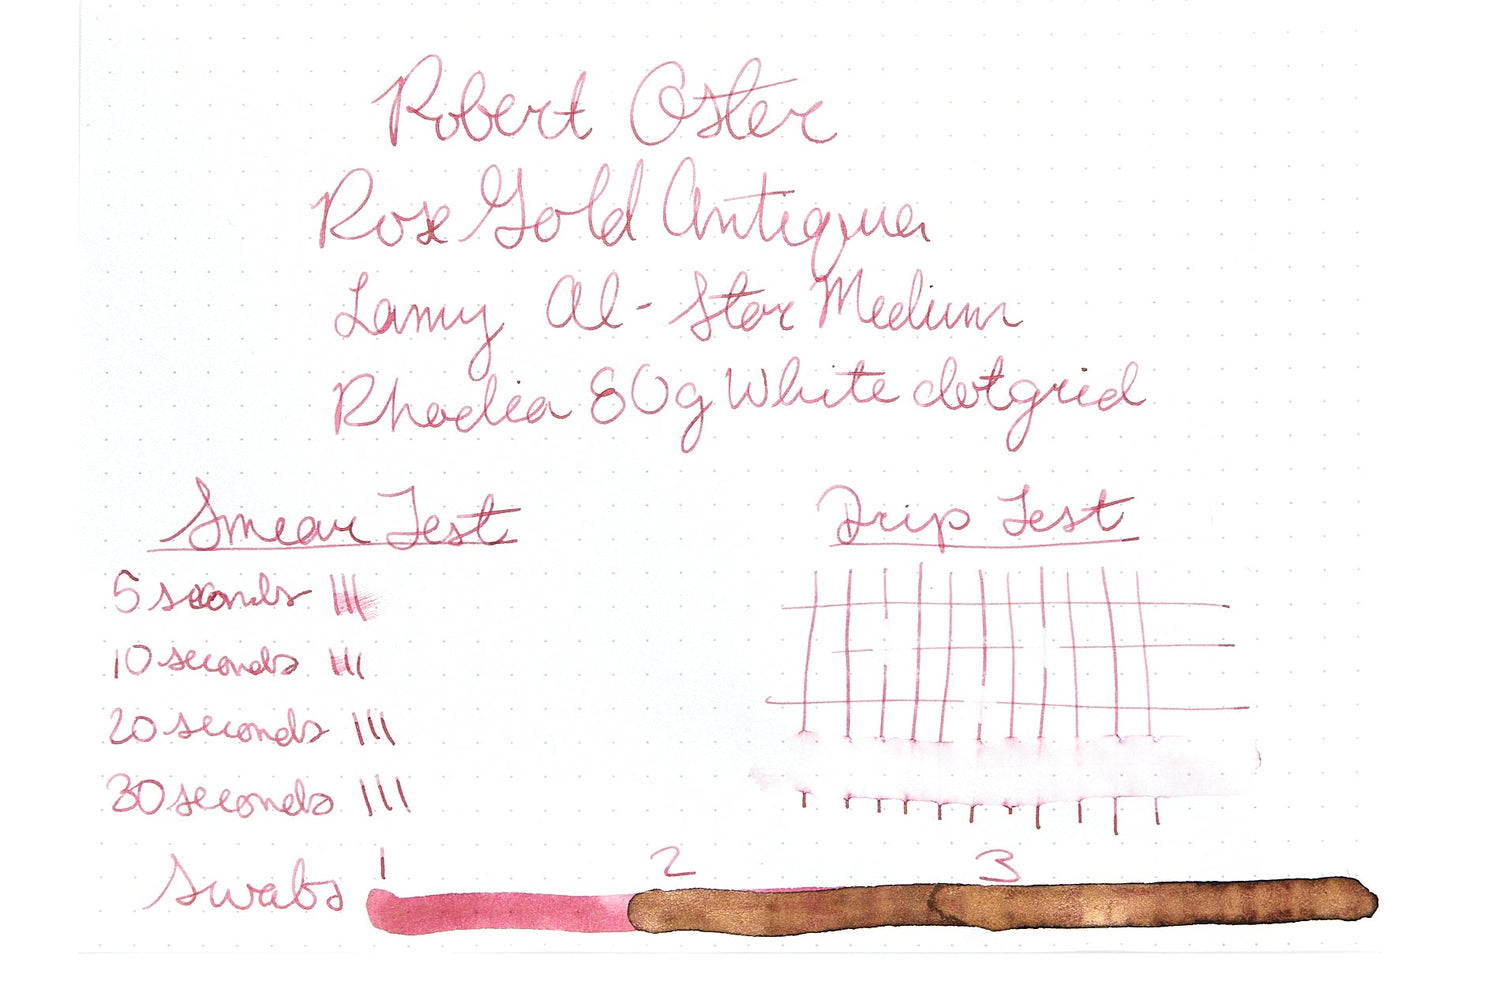 ink review : Robert Oster Gold Antiqua – inkxplorations